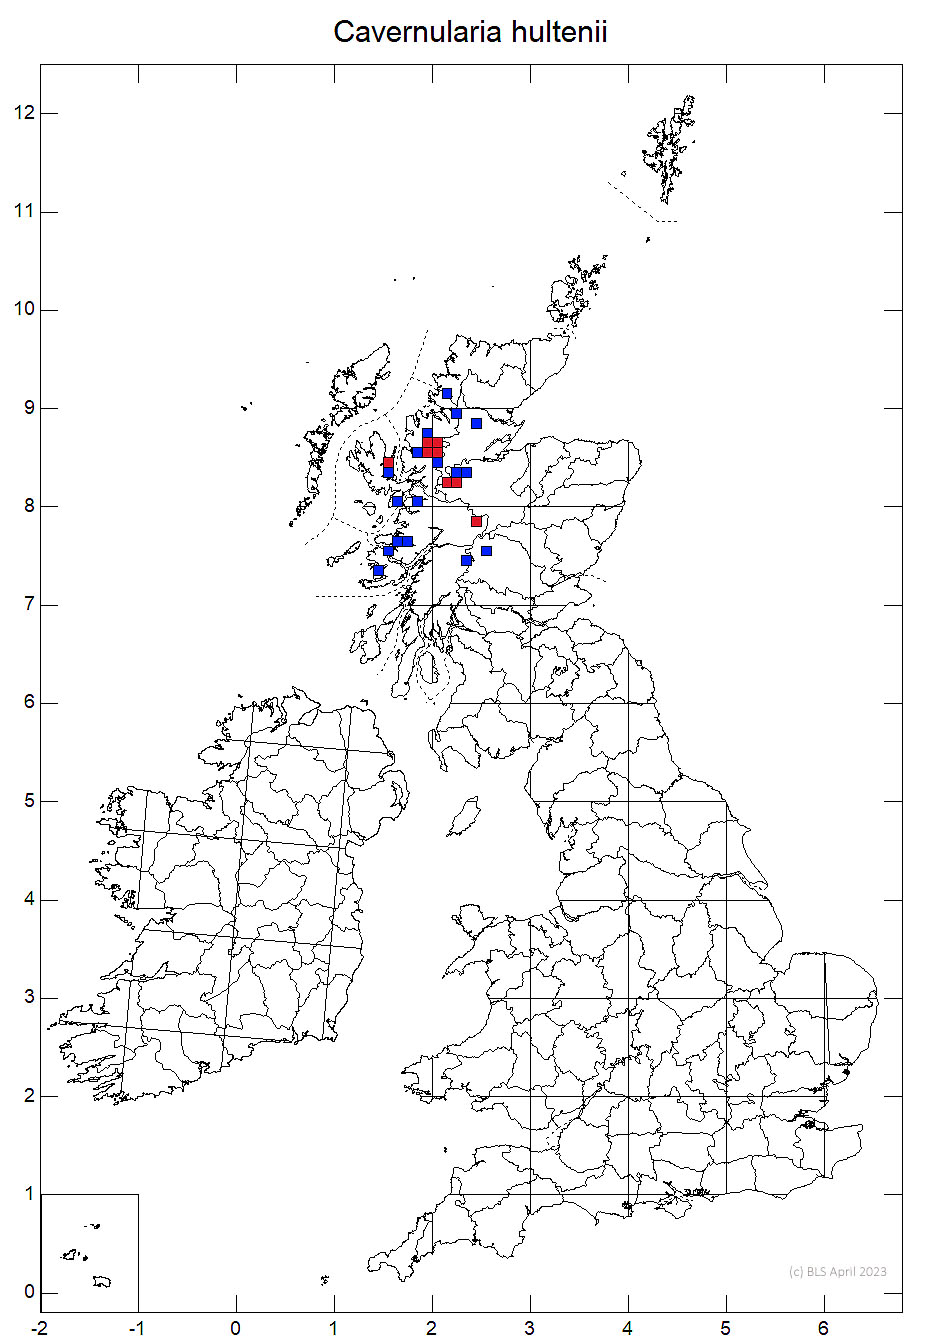 Cavernularia hultenii 10km sq distribution map